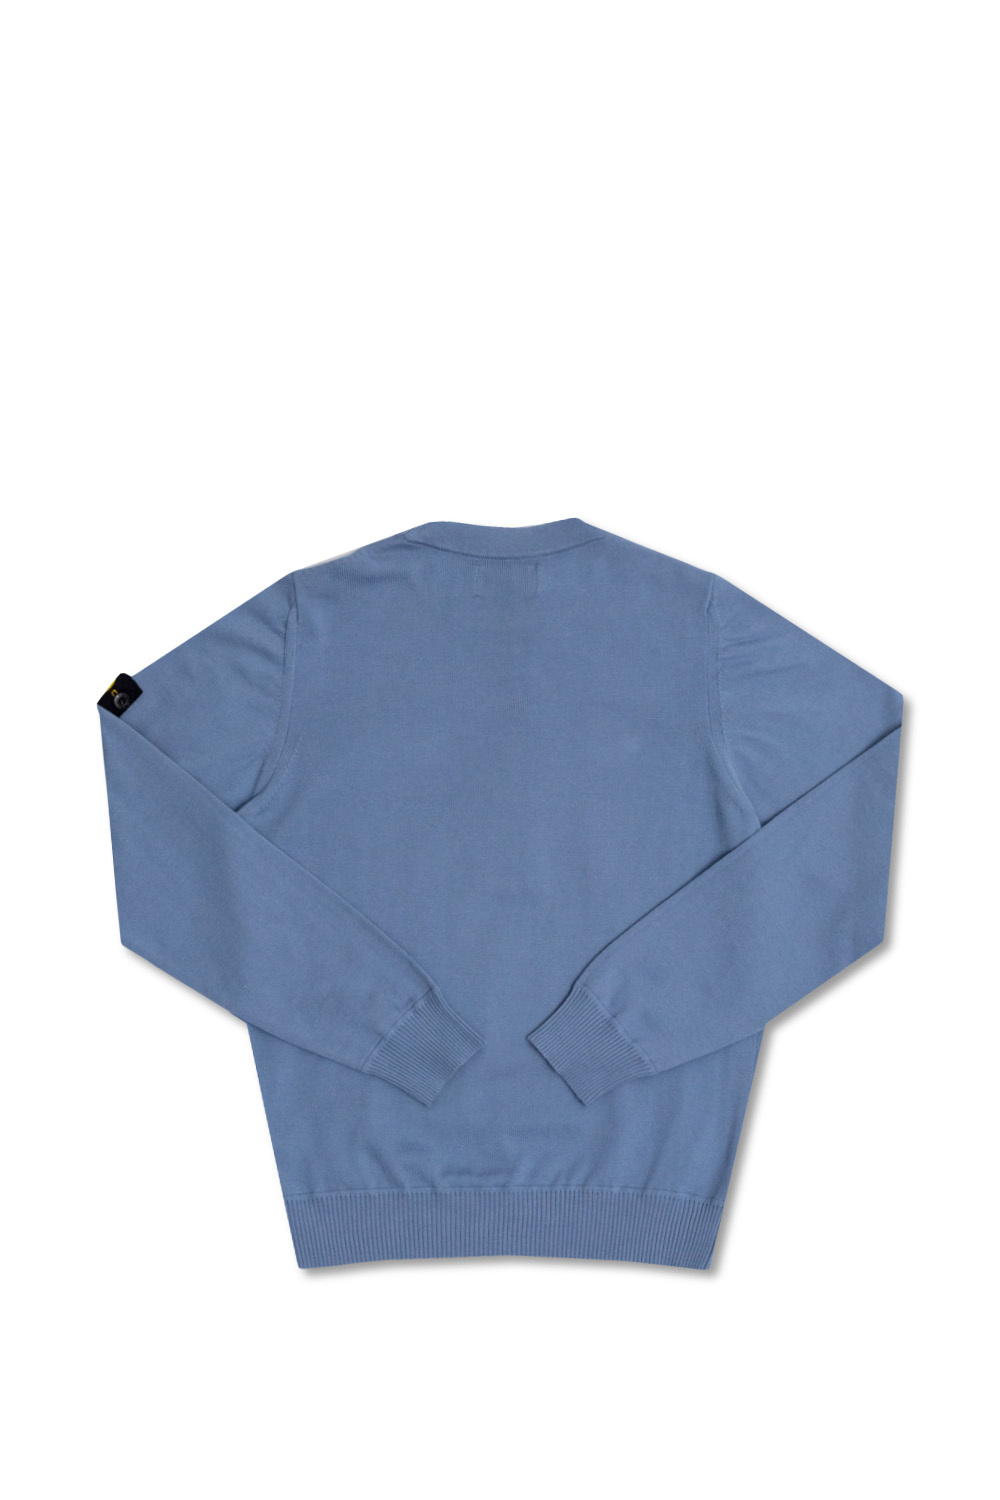 T-shirt Salewa Puez Mel Dry azul celeste mulher Cotton sweater